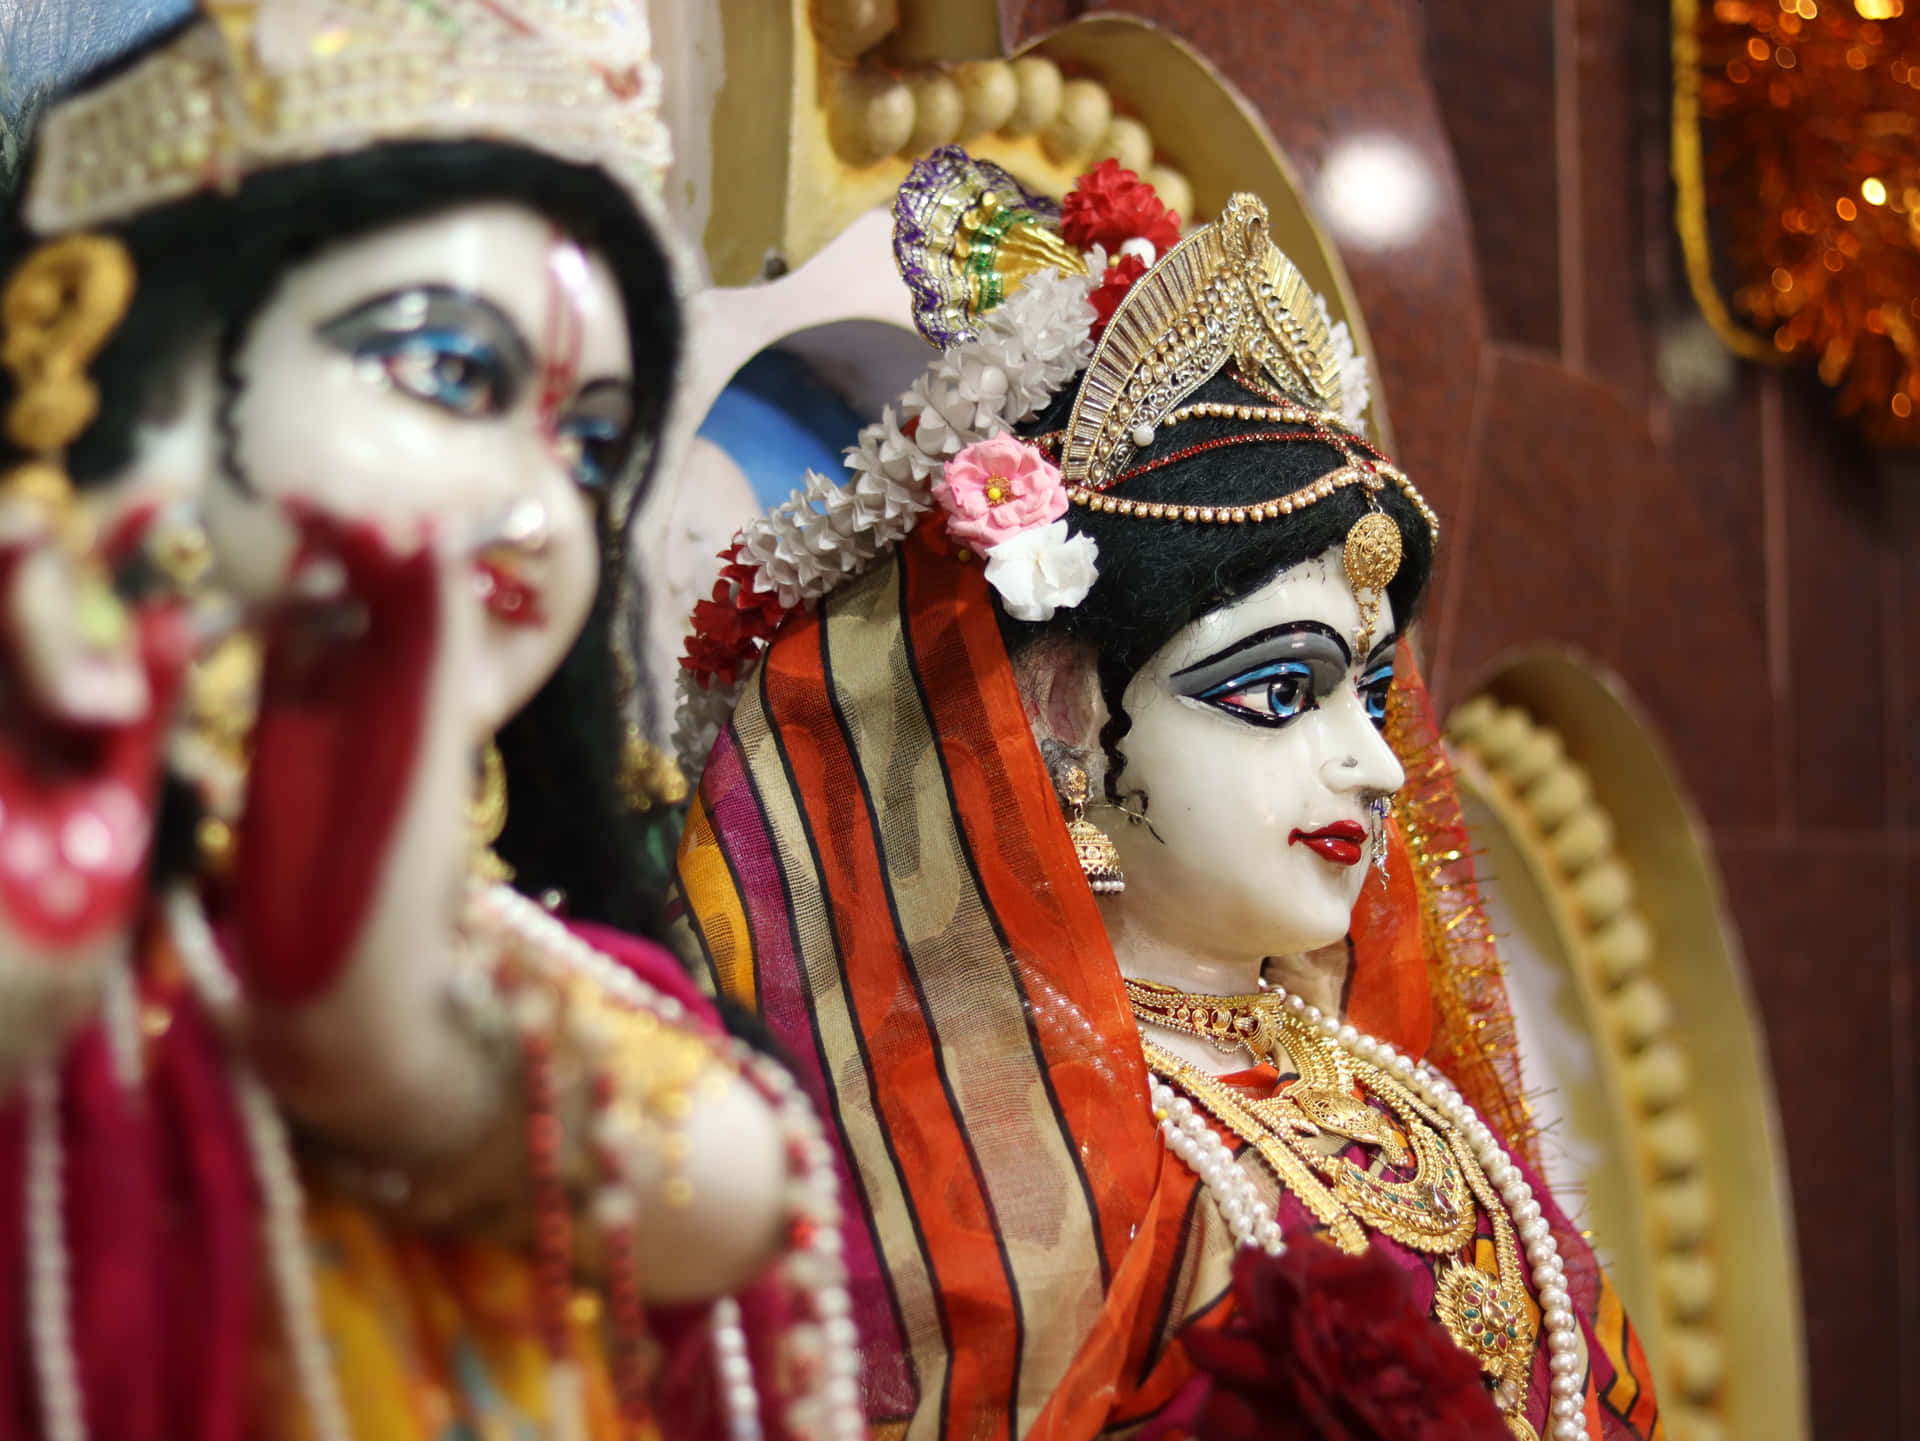 "Lord Krishna, the embodiment of divine love and wisdom"